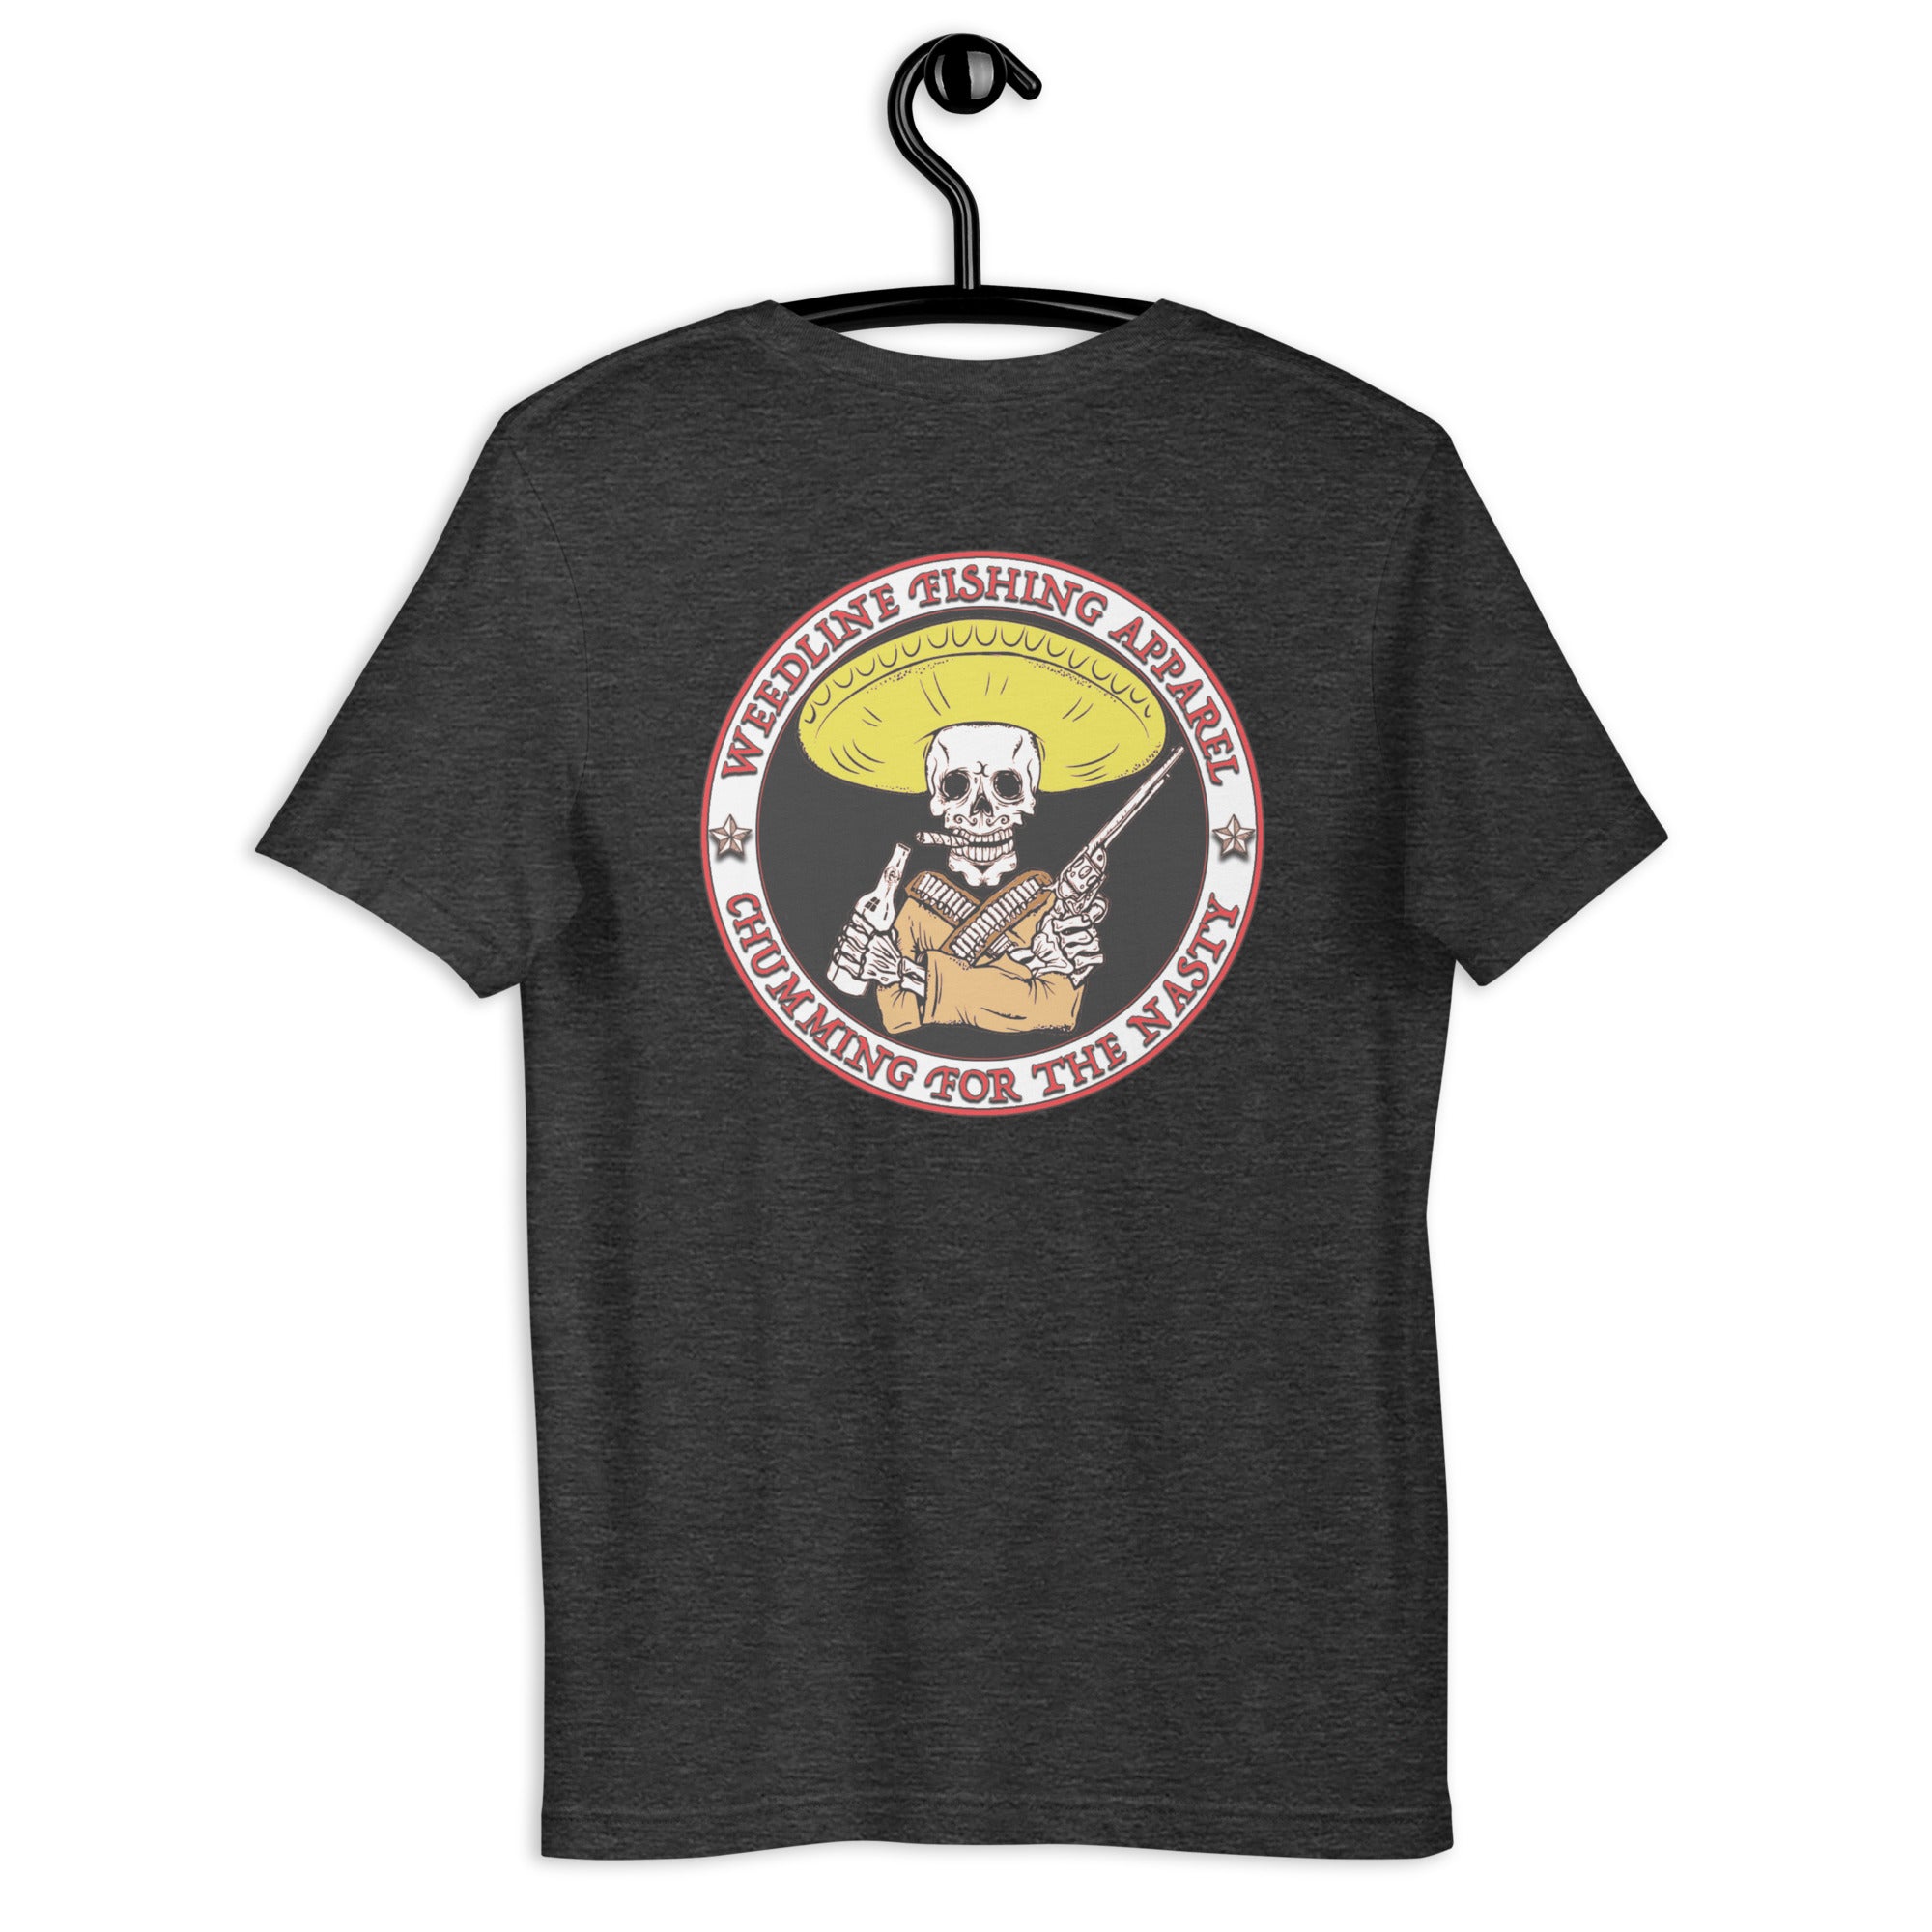 Weedline Fishing Apparel "Chumming" T-Shirt